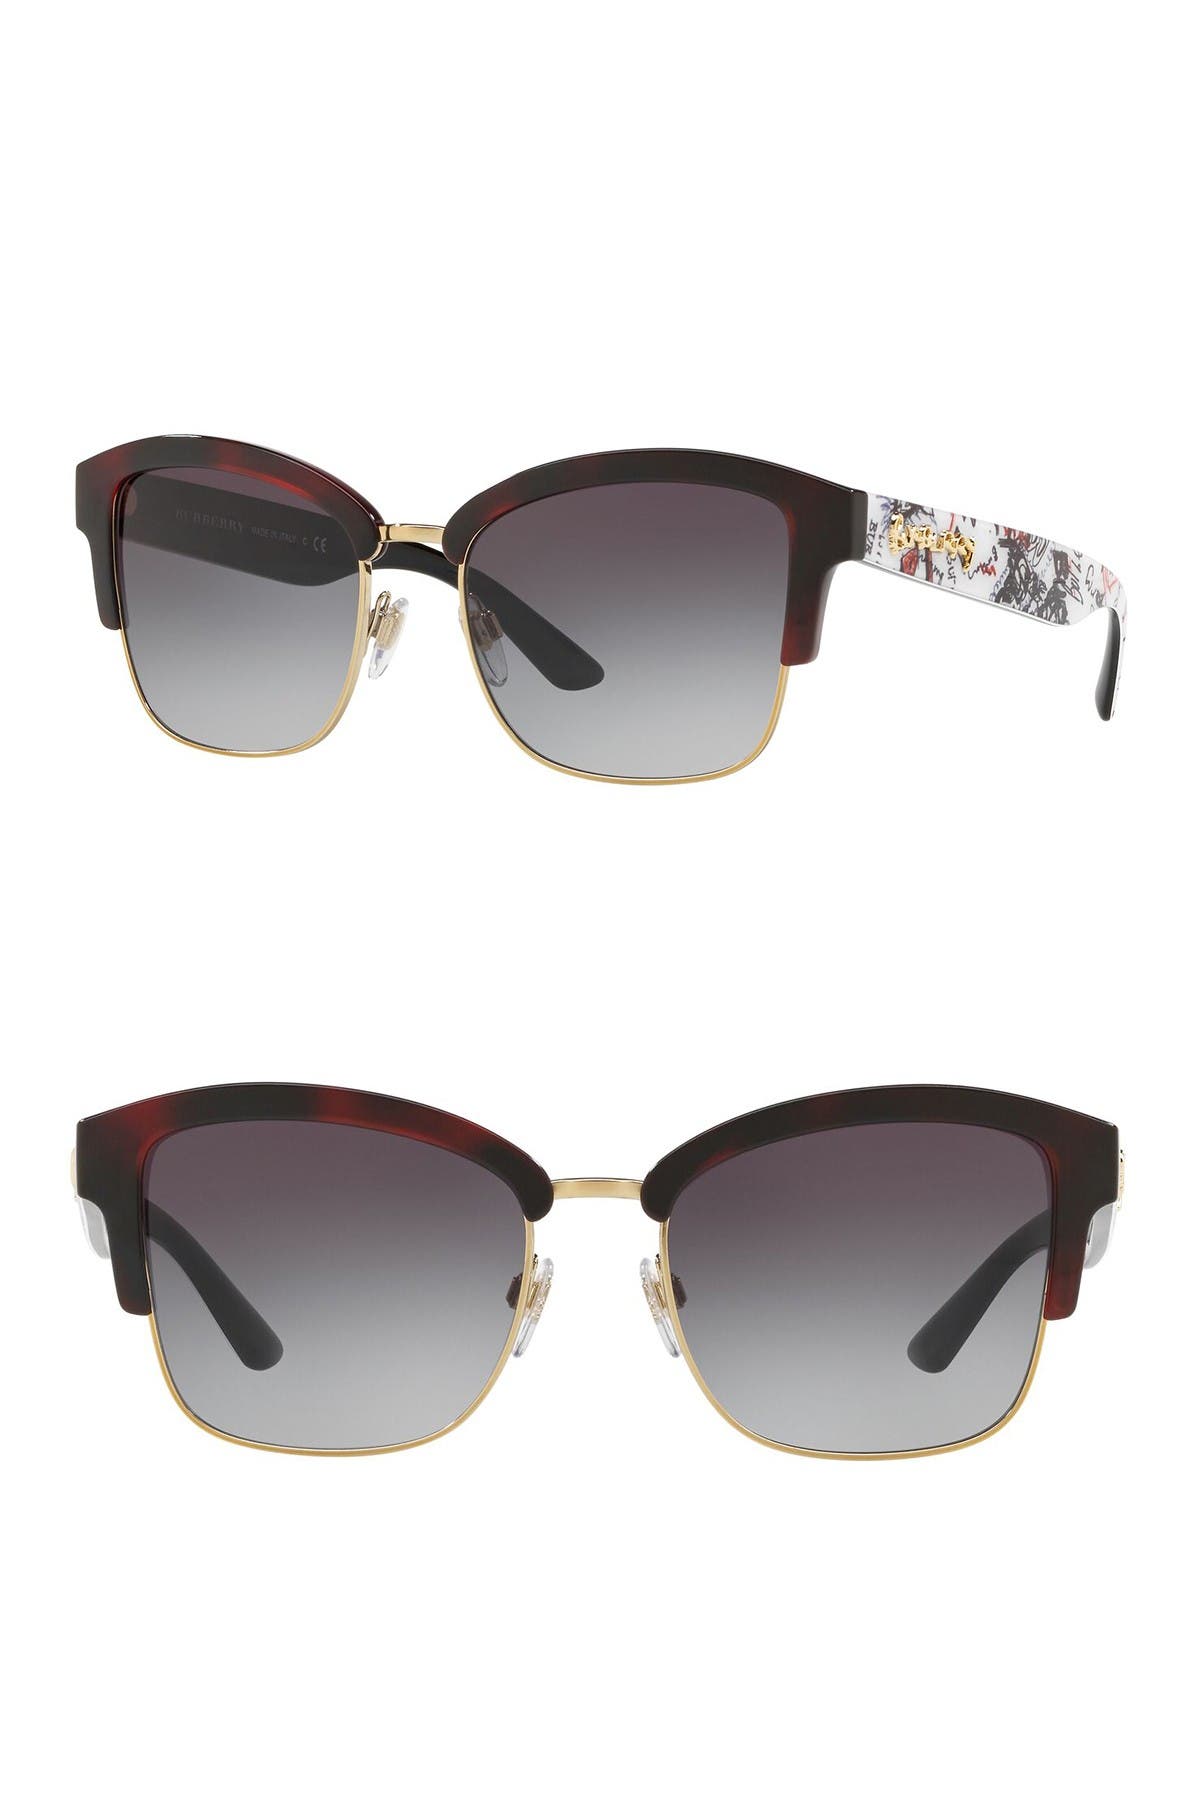 Burberry | 54mm Clubmaster Sunglasses 